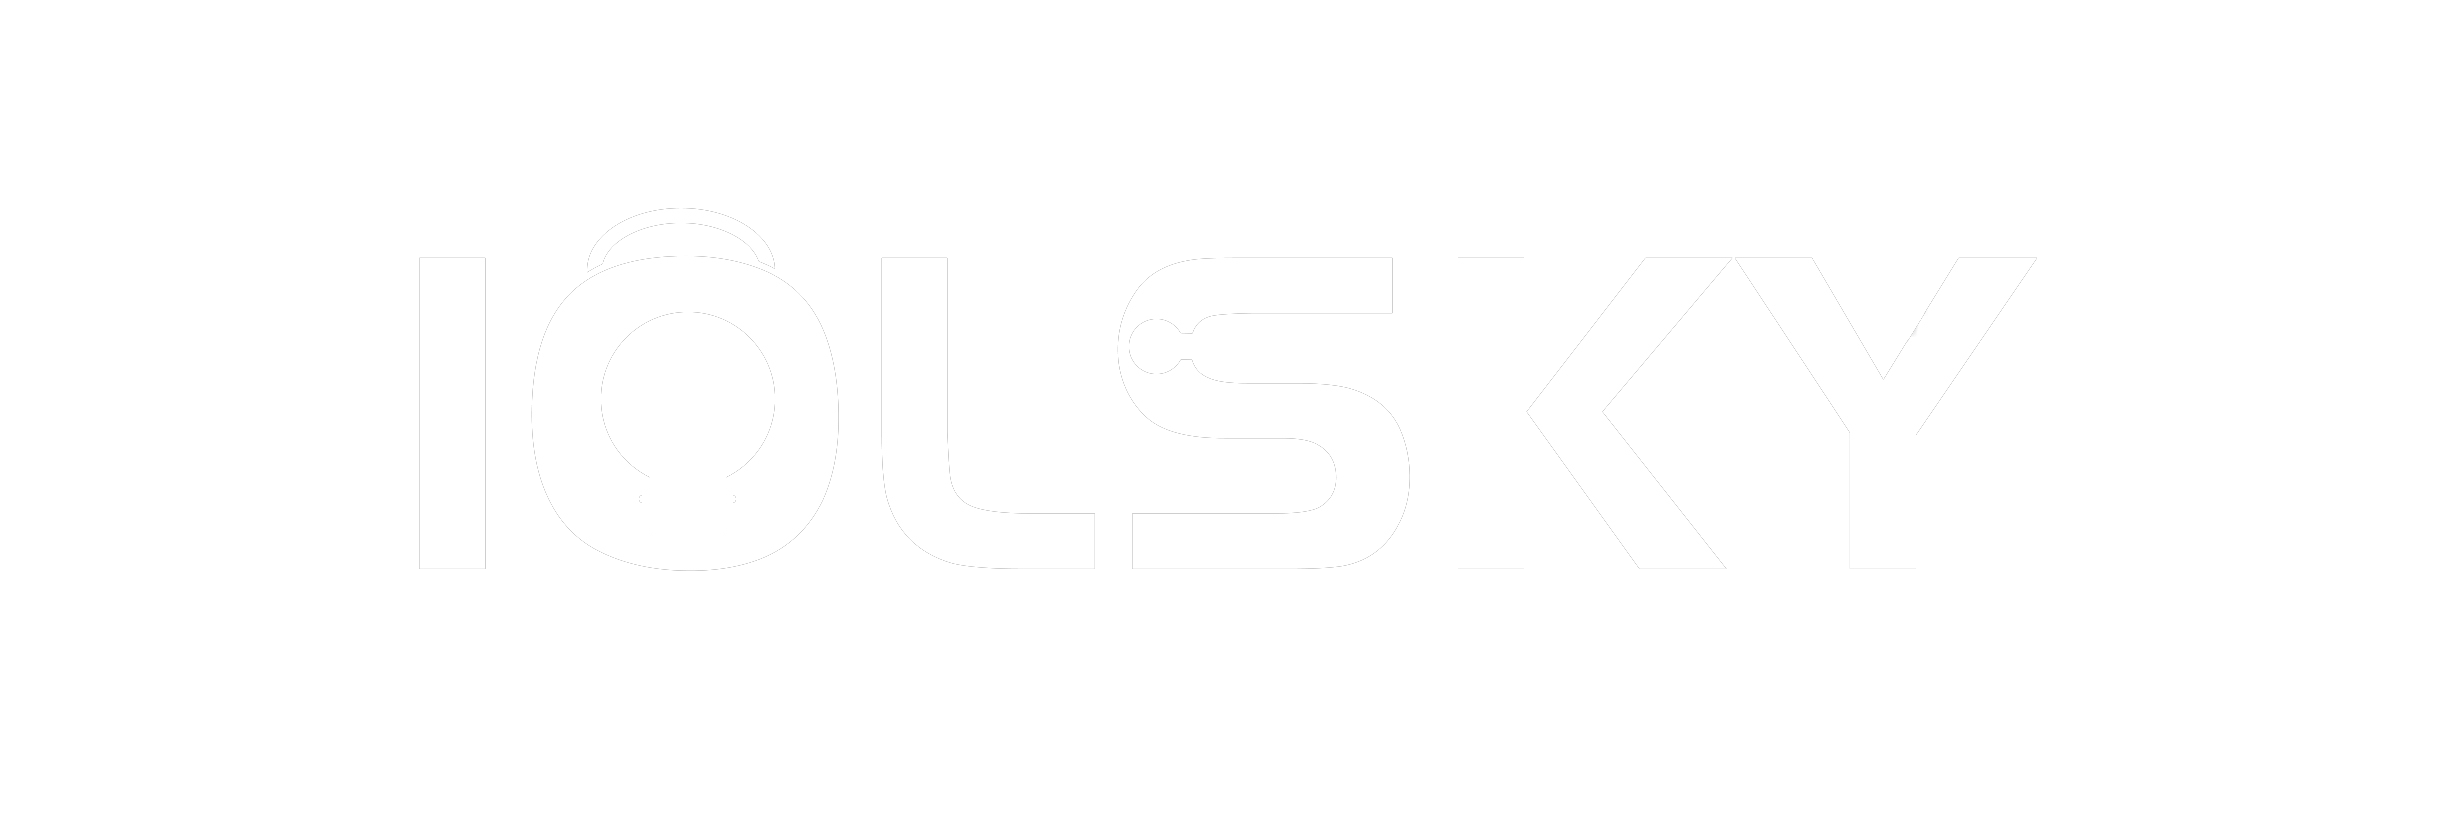 olsky deep tissue handheld electric body back massage gun for athletes –  iolsky